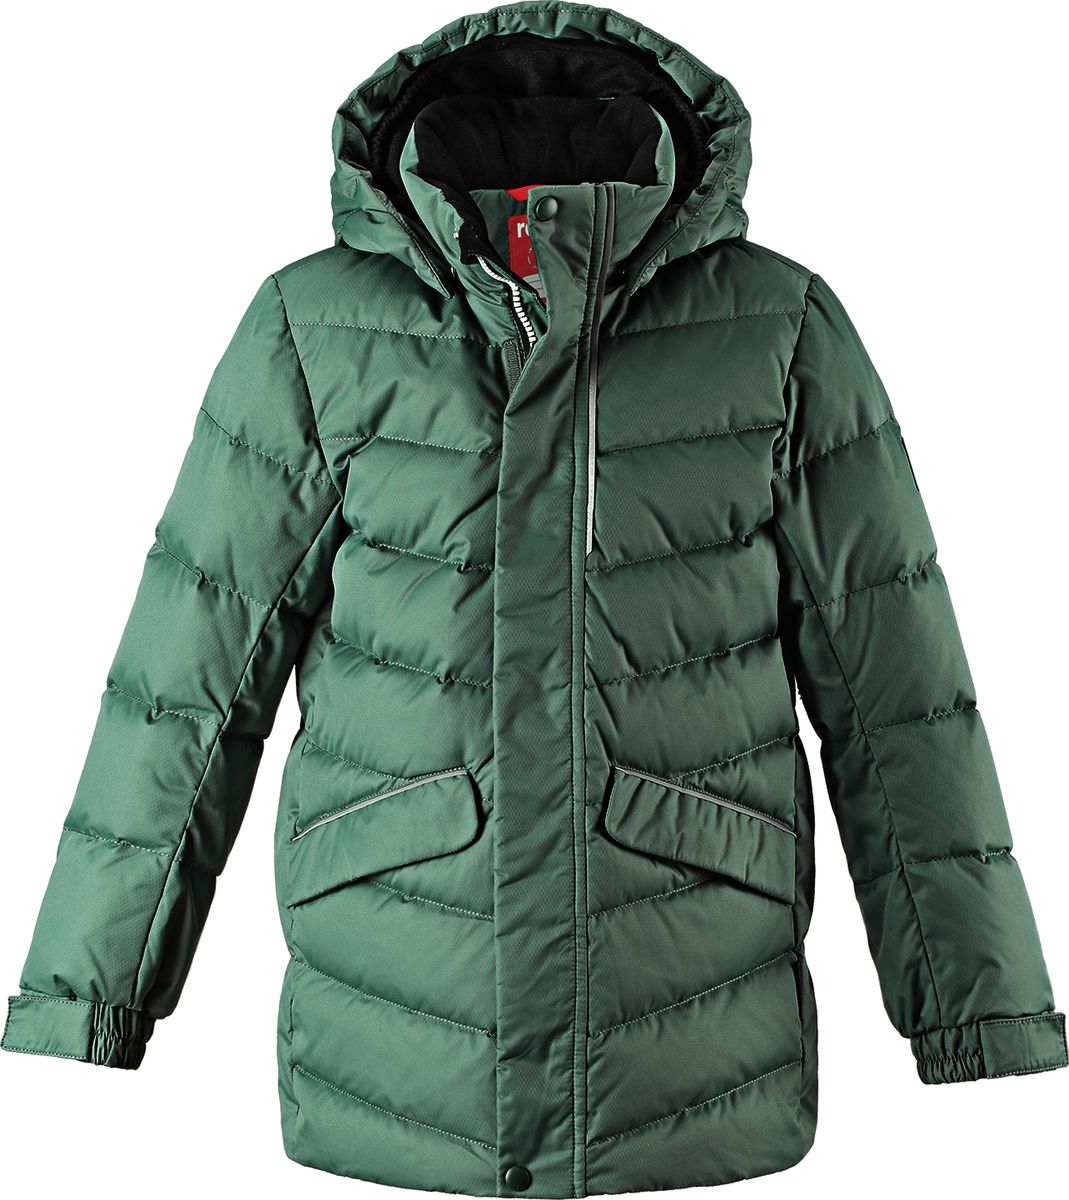 Куртка для мальчика Reima Janne, цвет: зеленый. 5313718630. Размер 146